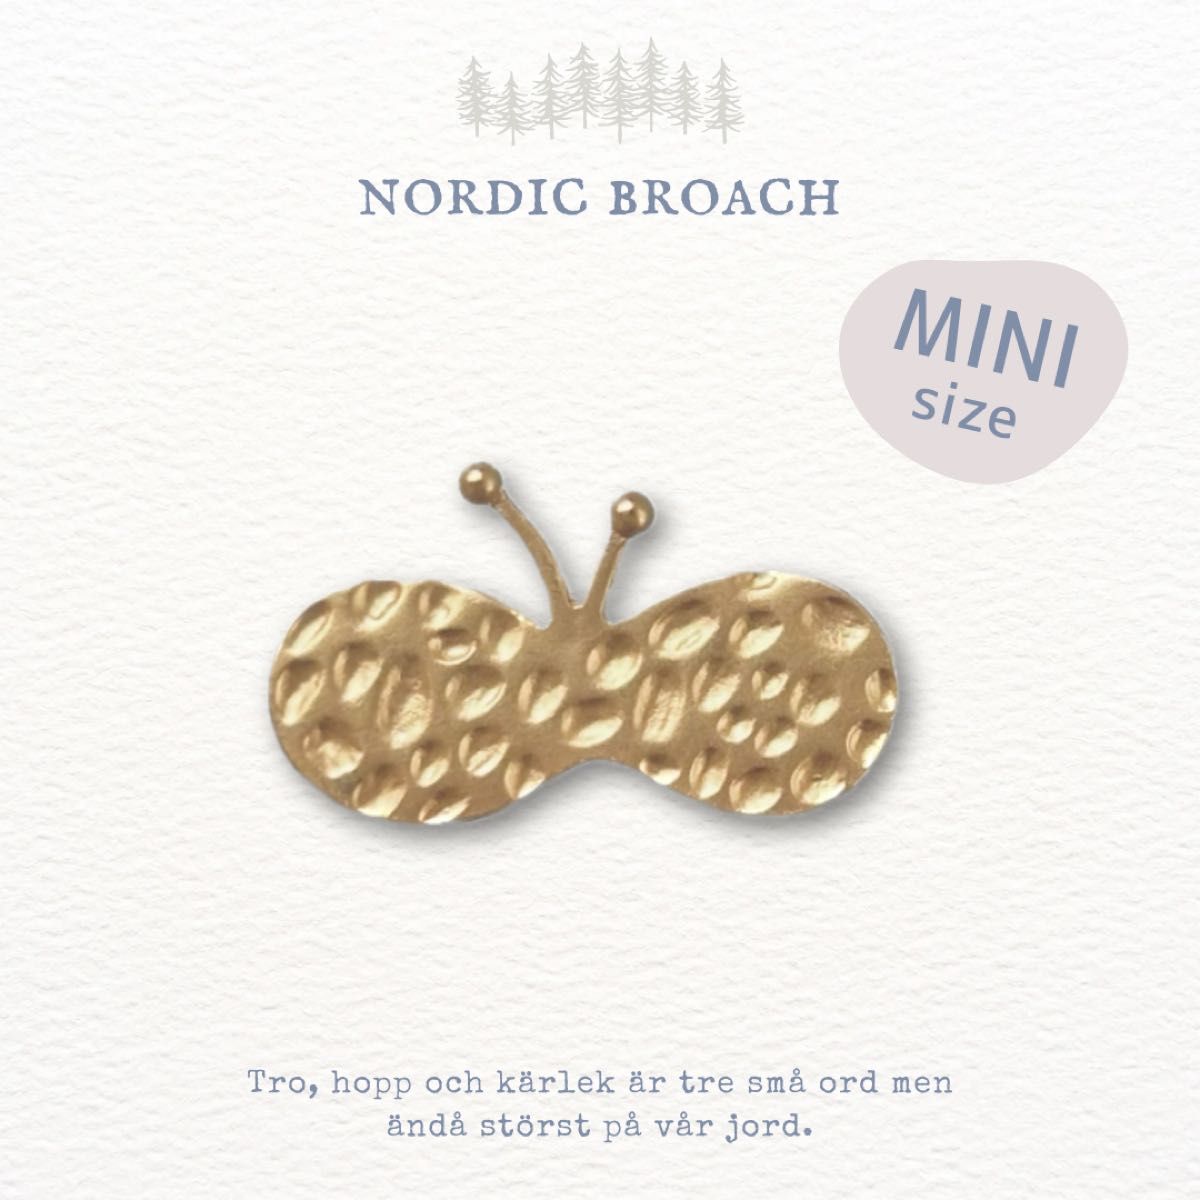 Nordic broach 北欧風 ブローチ miniちょうちょ マットゴールド ミナペルホネンお好きな方に